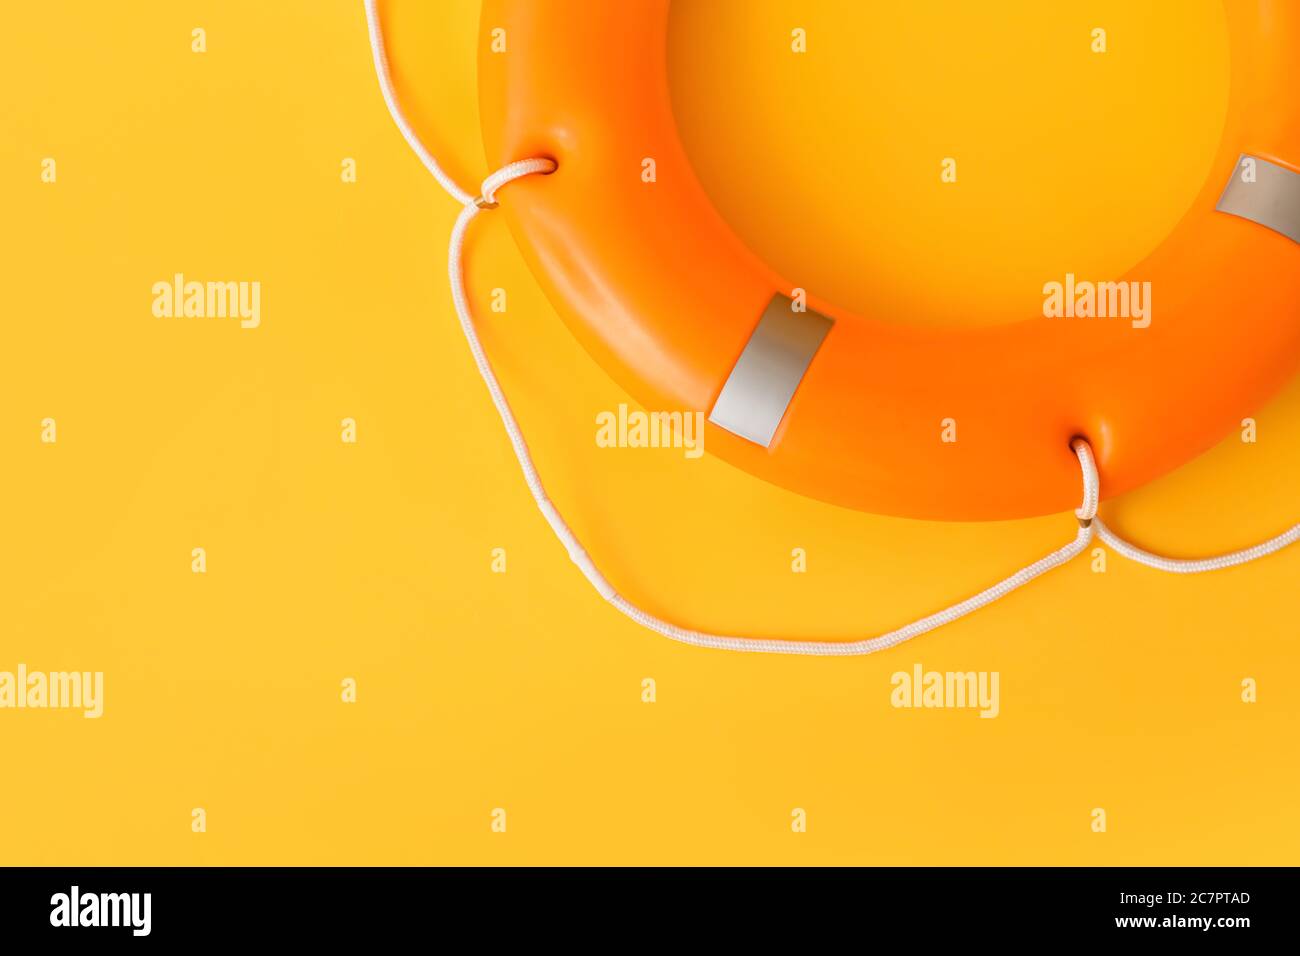 Lifebuoy ring on color background Stock Photo